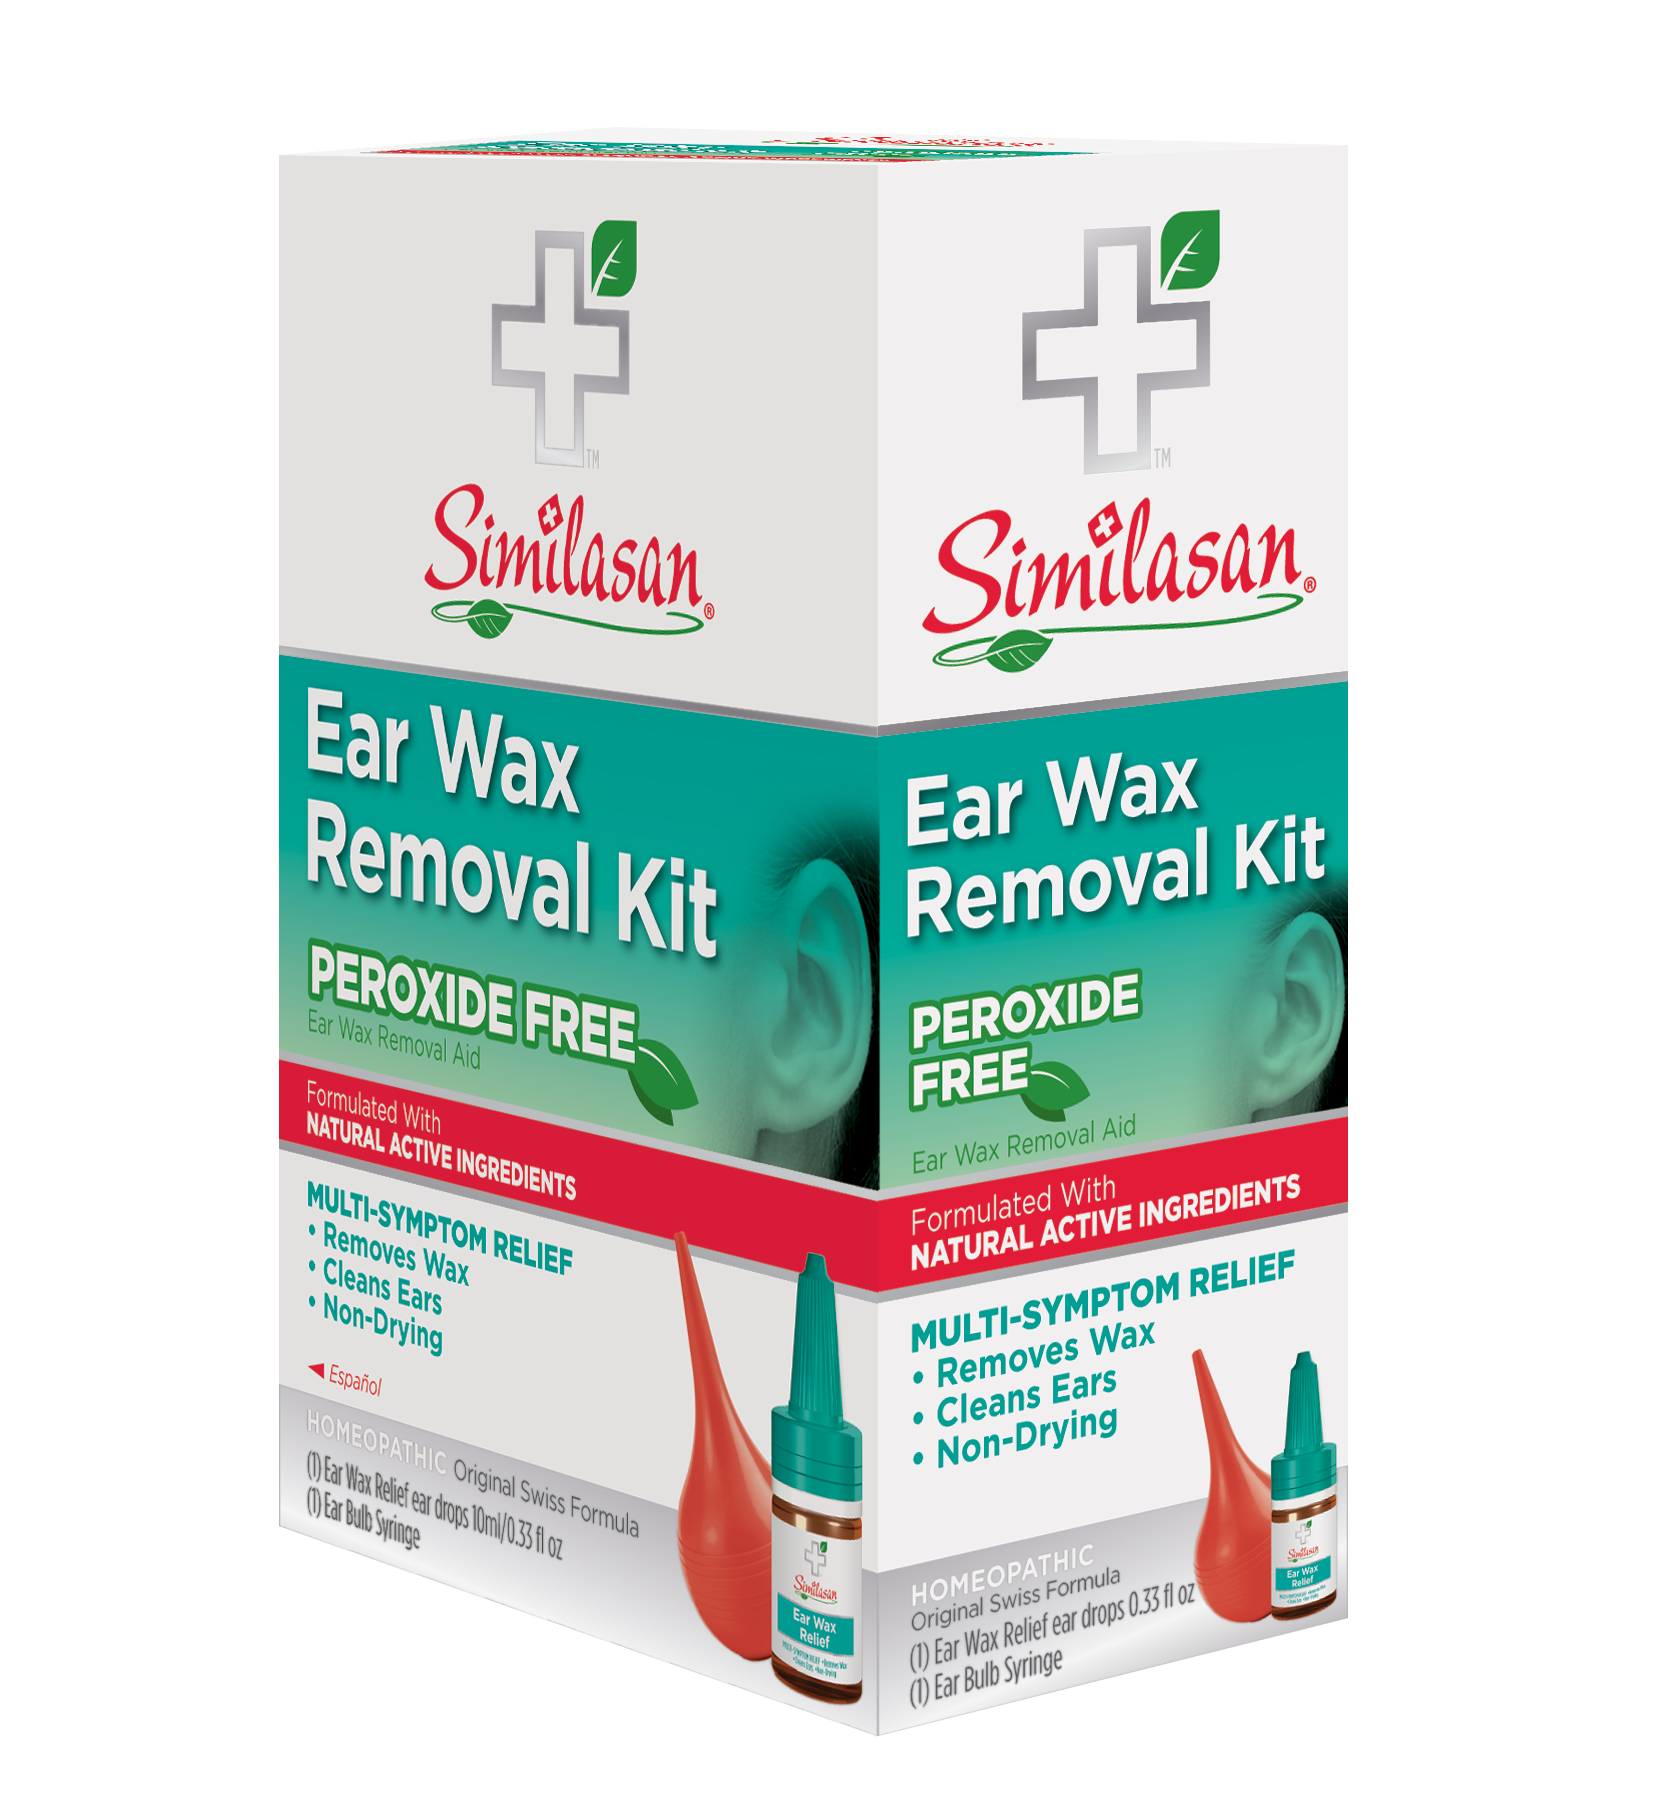 Ear Wax Removal Kit by Similasan Corporation